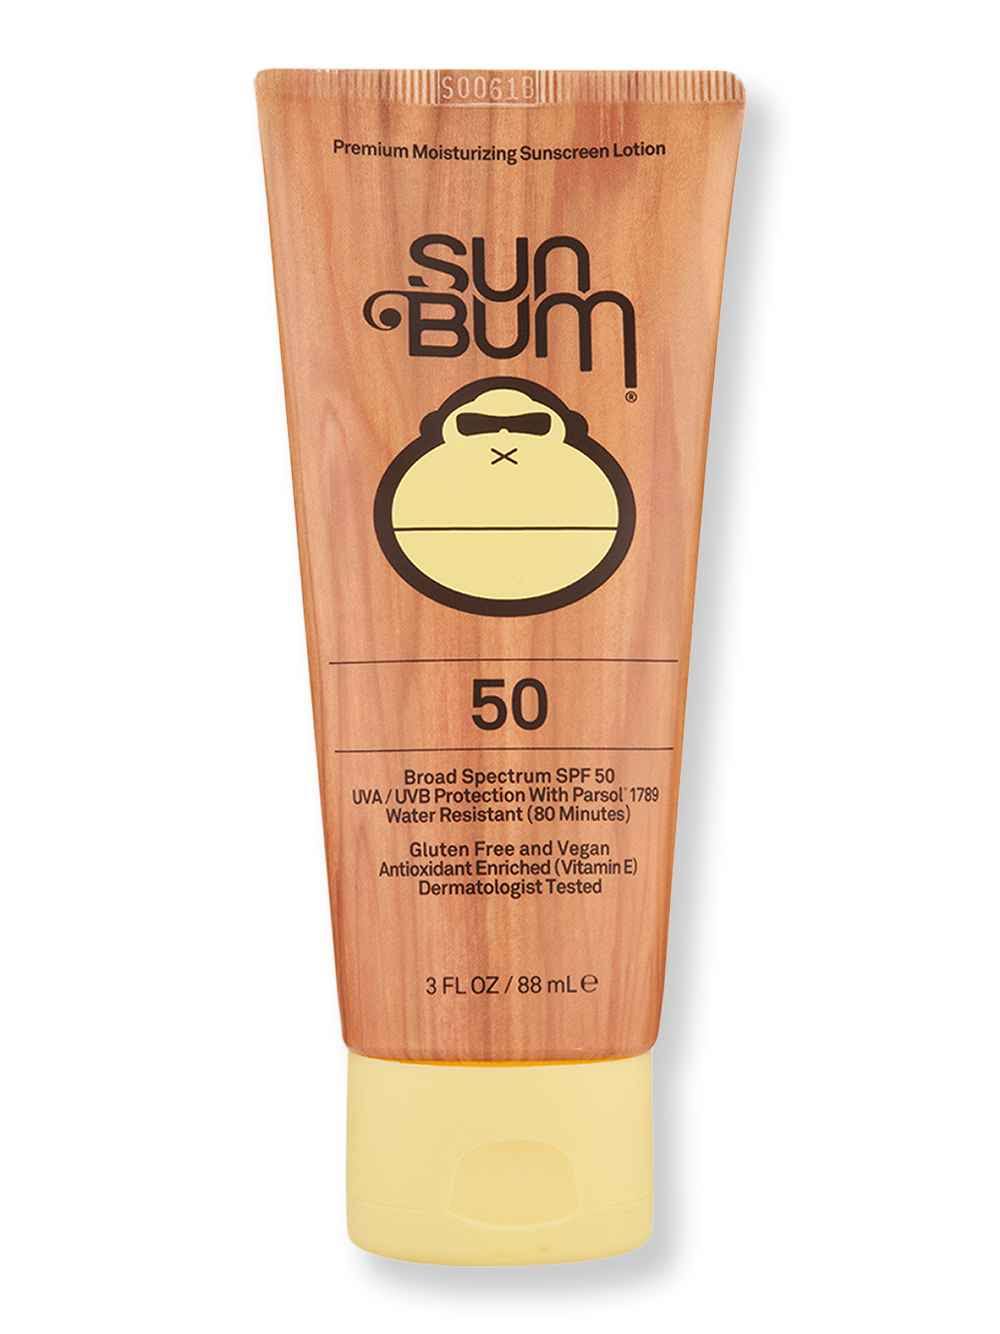 Sun Bum Original Sunscreen Lotion - SPF 50, 3oz